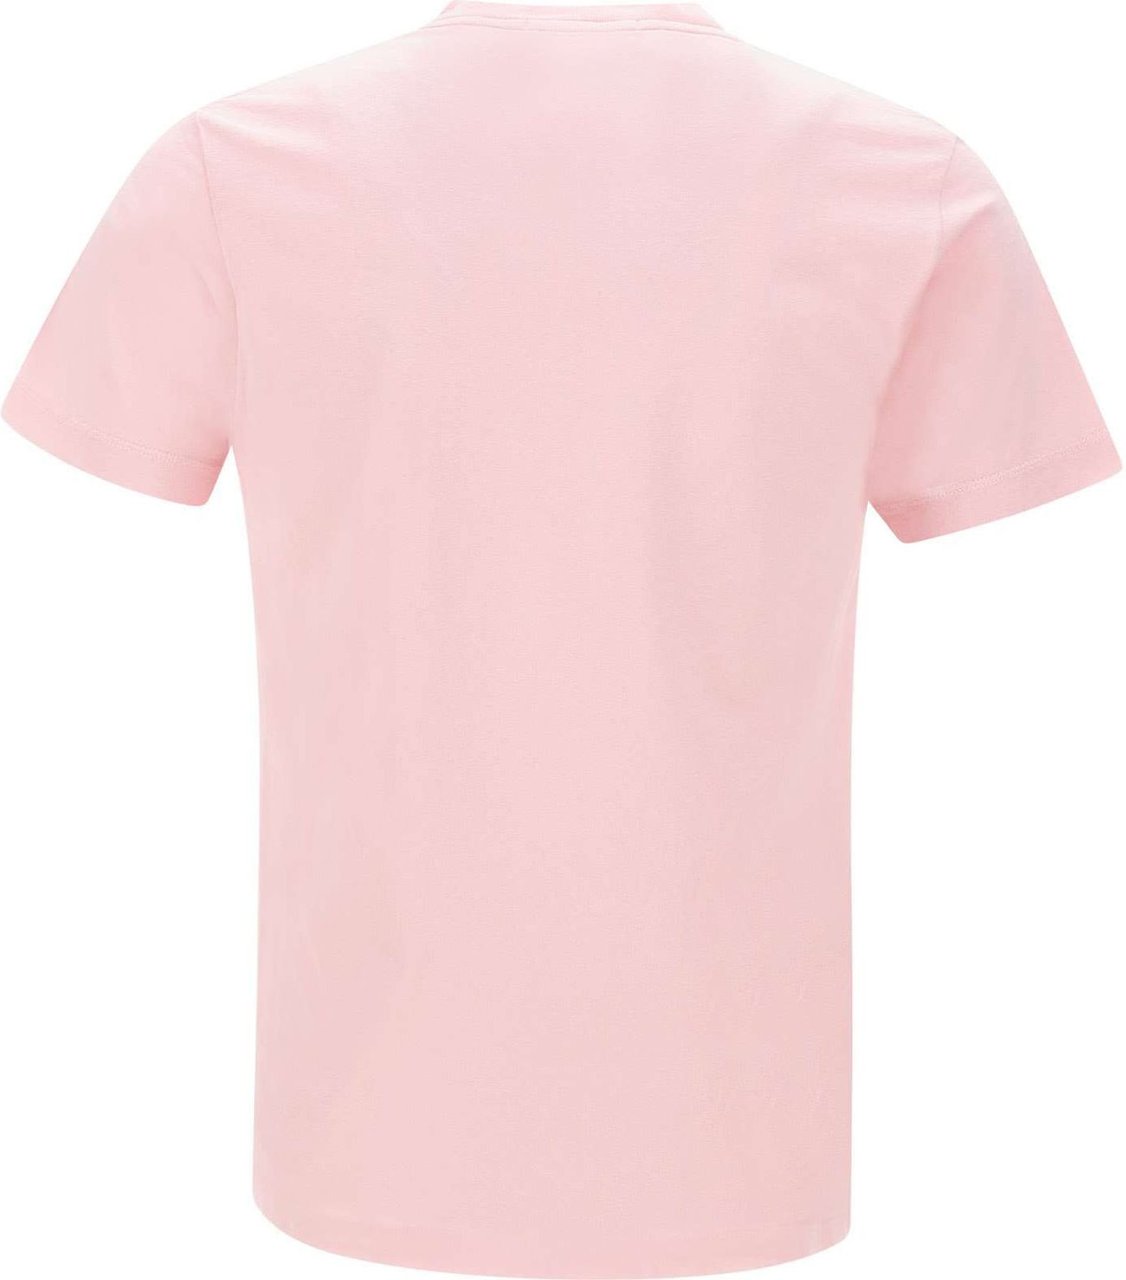 Stone Island T-shirt with logo print Roze